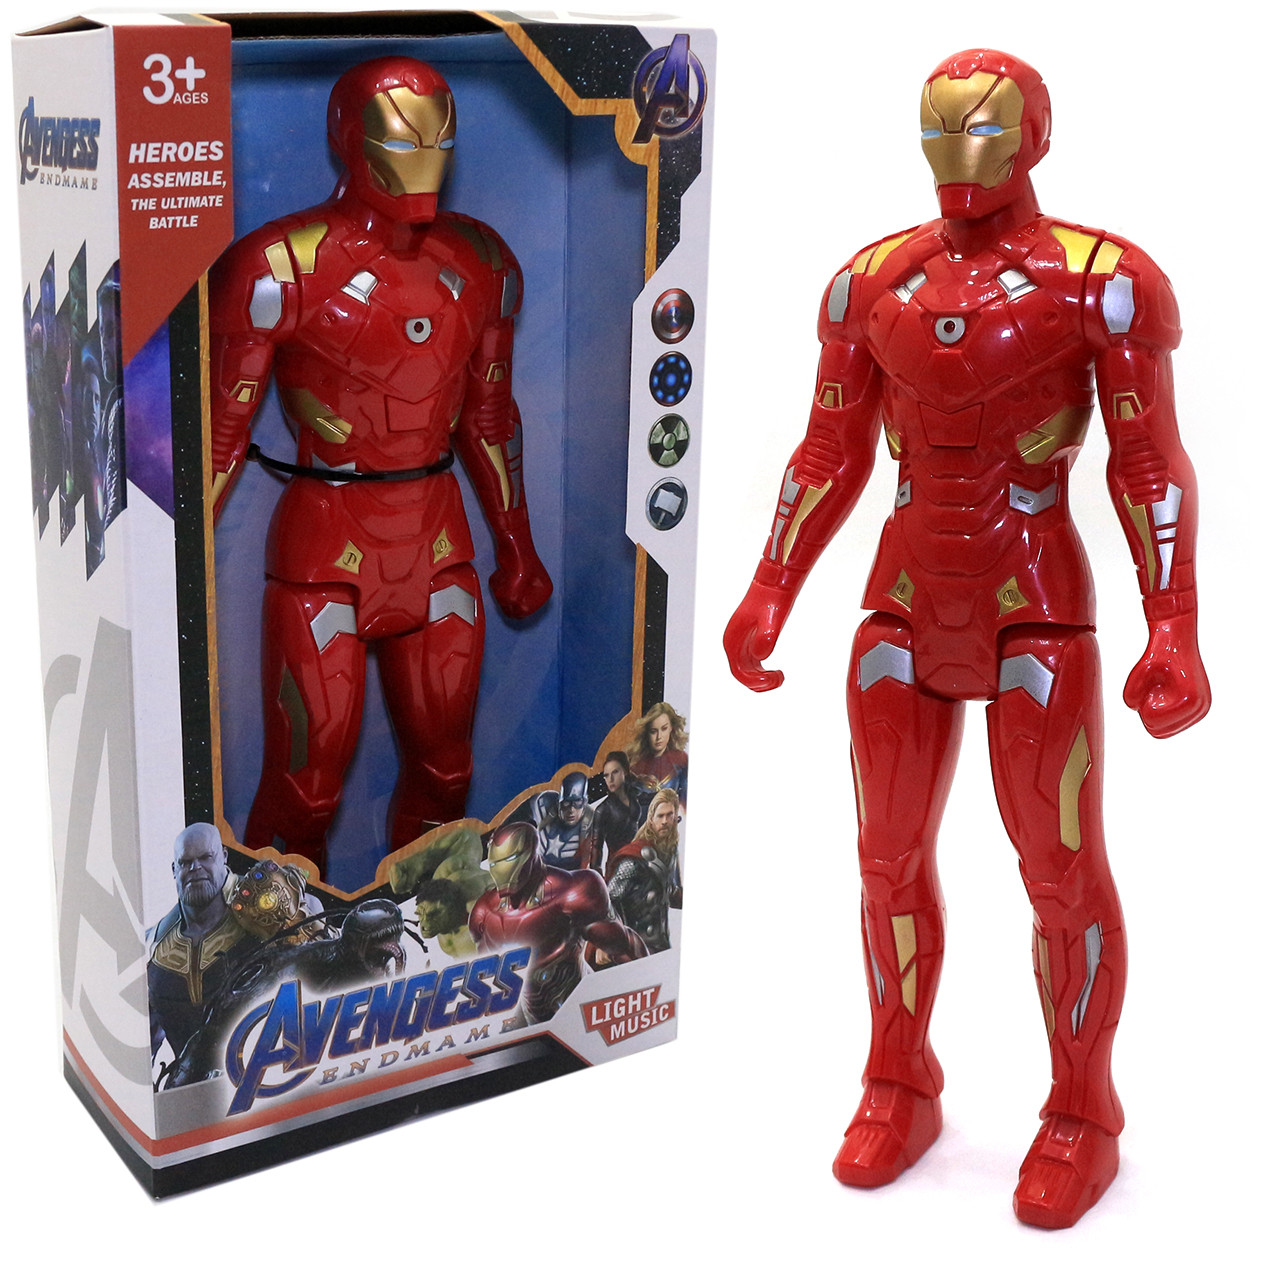 Игровая фигурка Железный человек Avengers Marvel Iron Man игрушка Мстители звук 30 см (206)